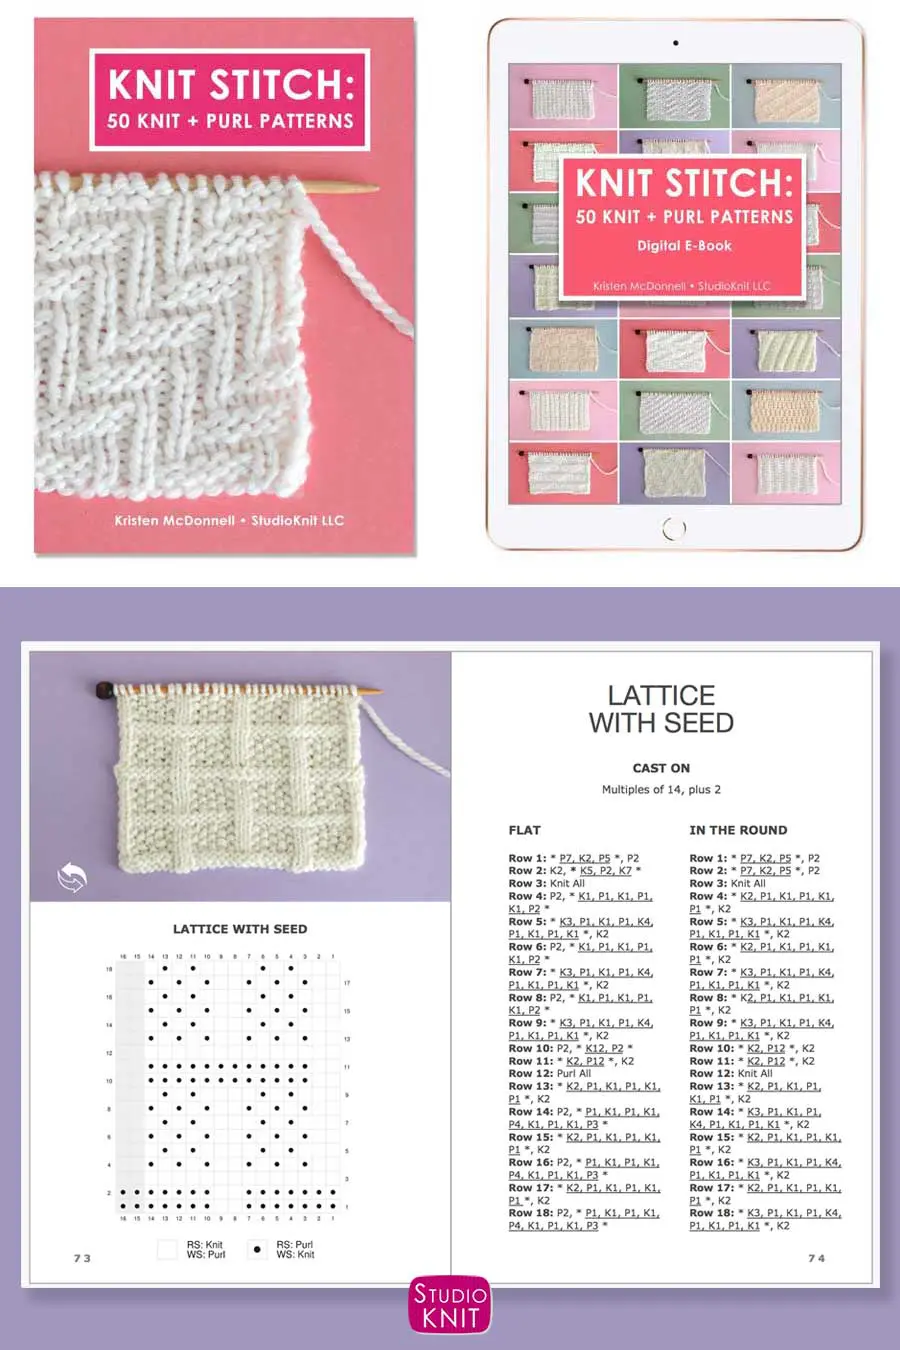 Knit Stitch Pattern Book with Lattice withe Seed Stitch Pattern by Studio Knit